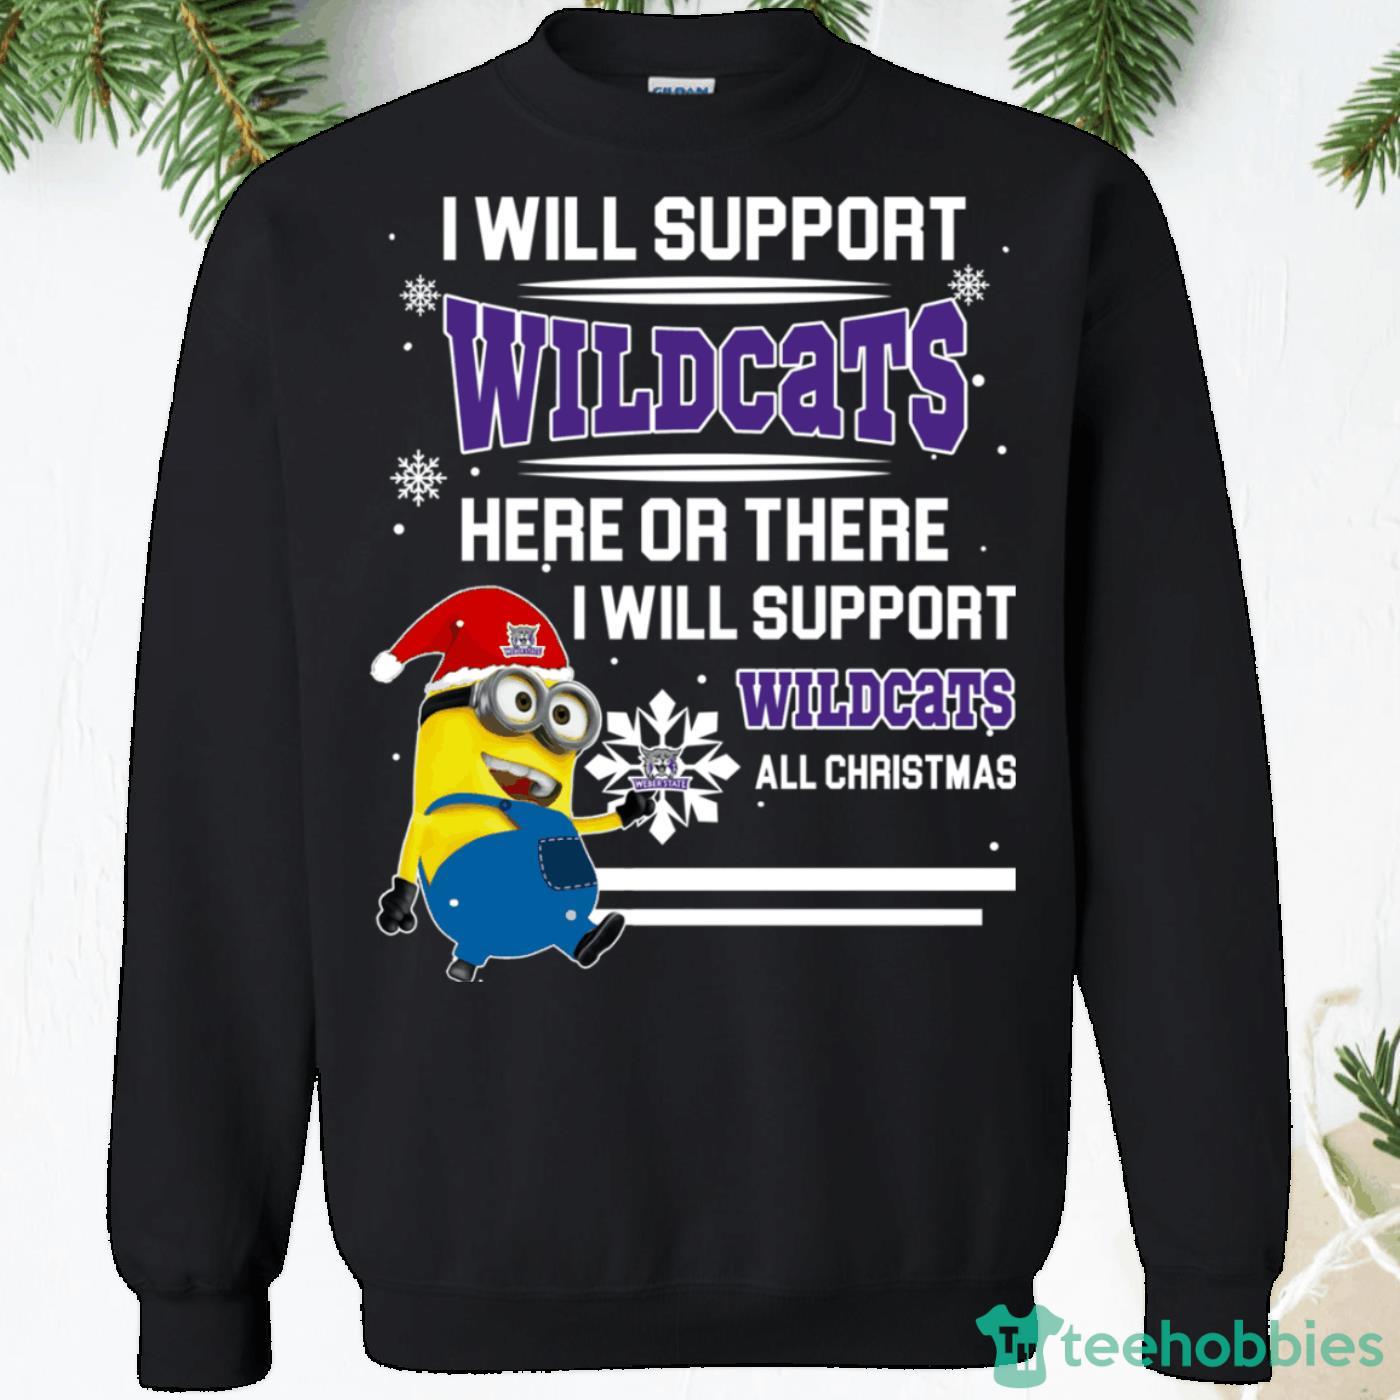 Wildcats Minion Cute Gift Christmas Sweatshirt - wildcats-minion-cute-gift-christmas-sweatshirt-1